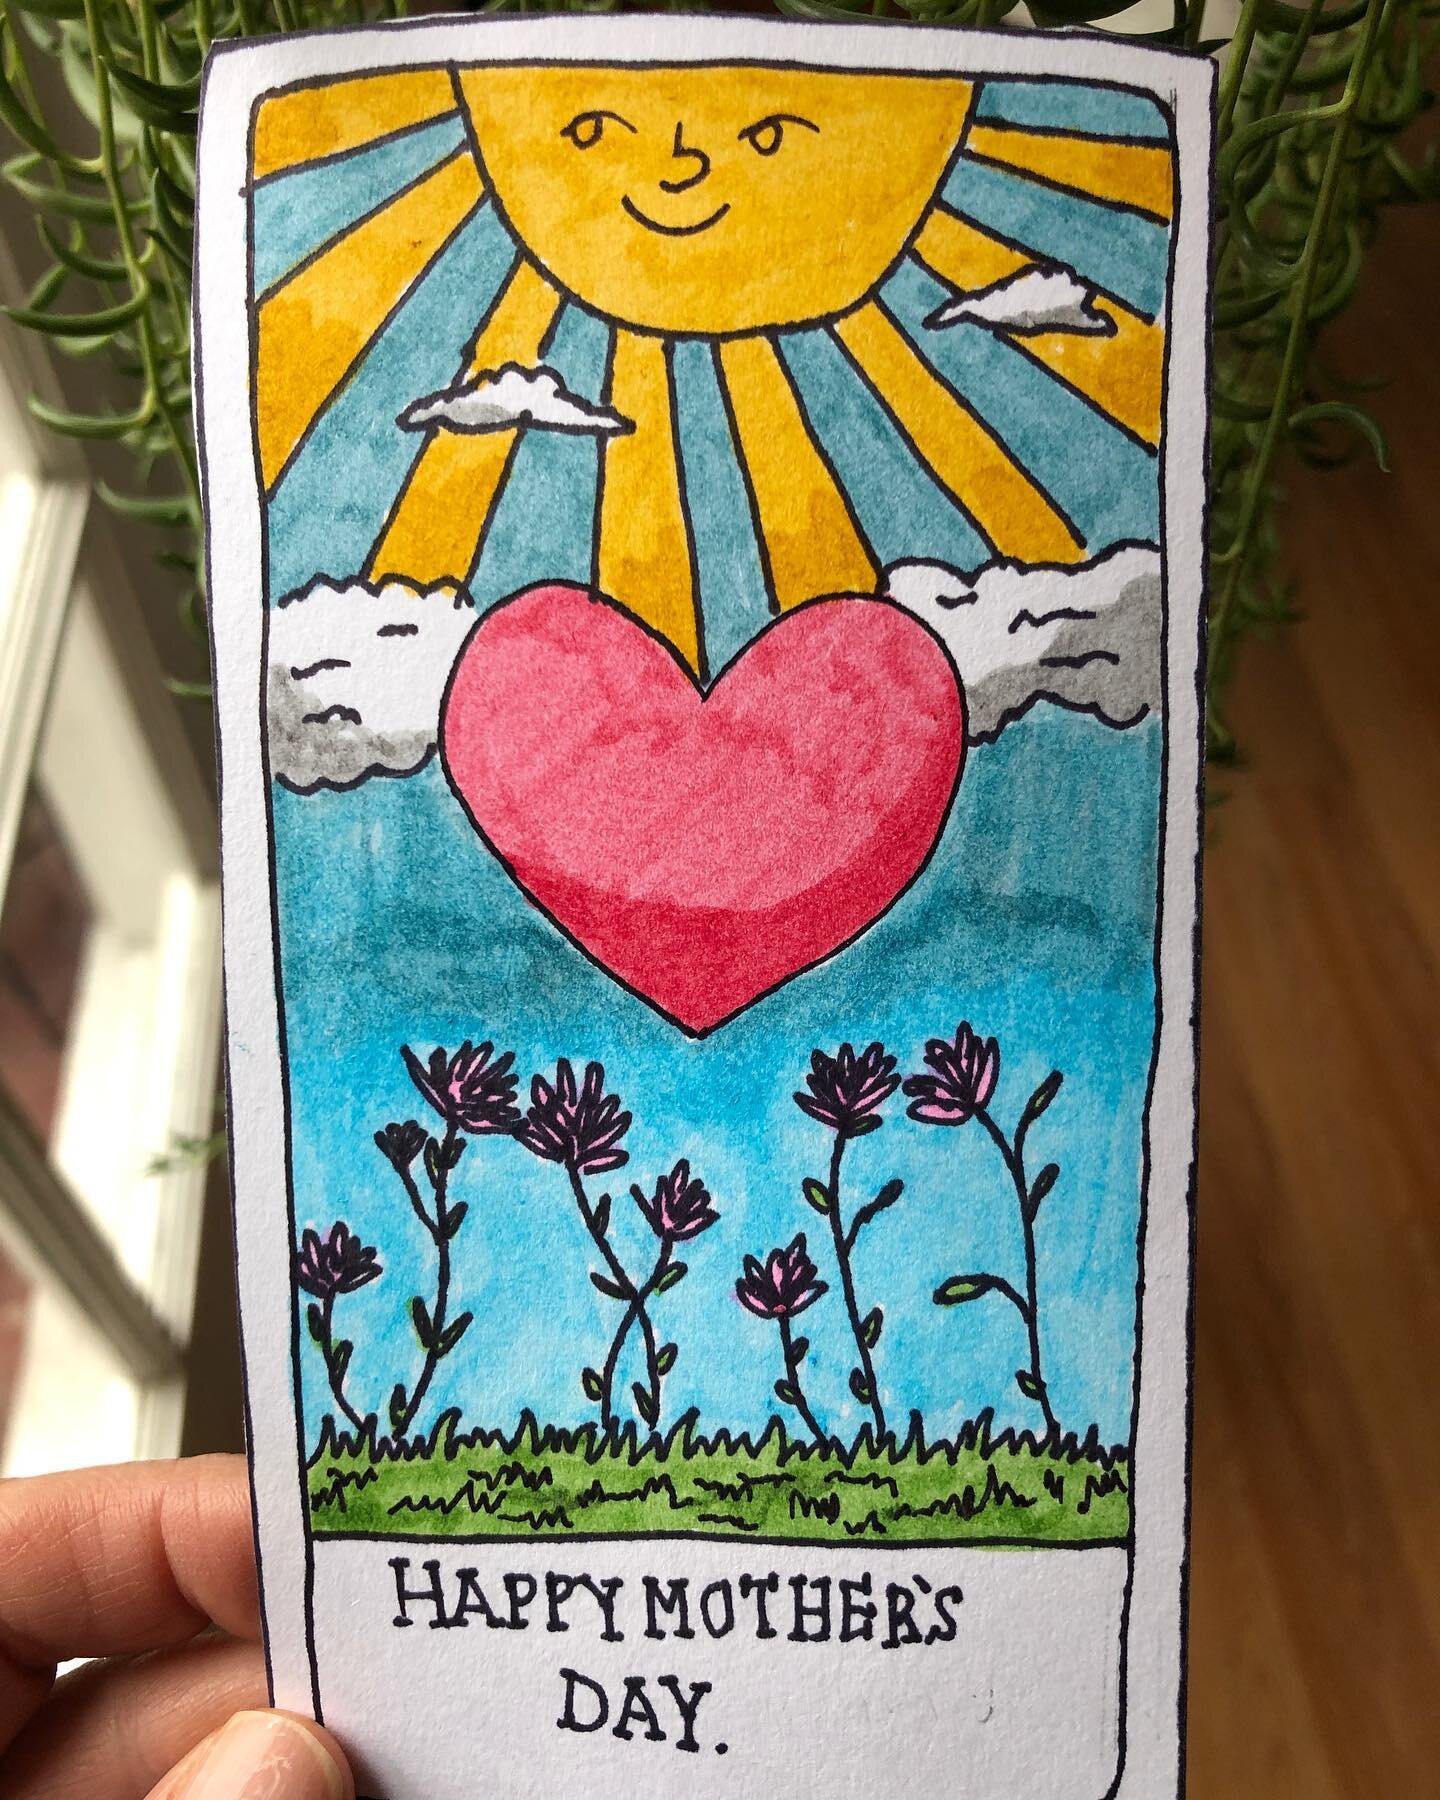 My sweet papaya made me this beautiful tarot card for Mother&rsquo;s Day! ❤️❤️❤️#mothersday #teenartist #tarot #artfamily #tarotcard #whittier #artwork #proudmom #california